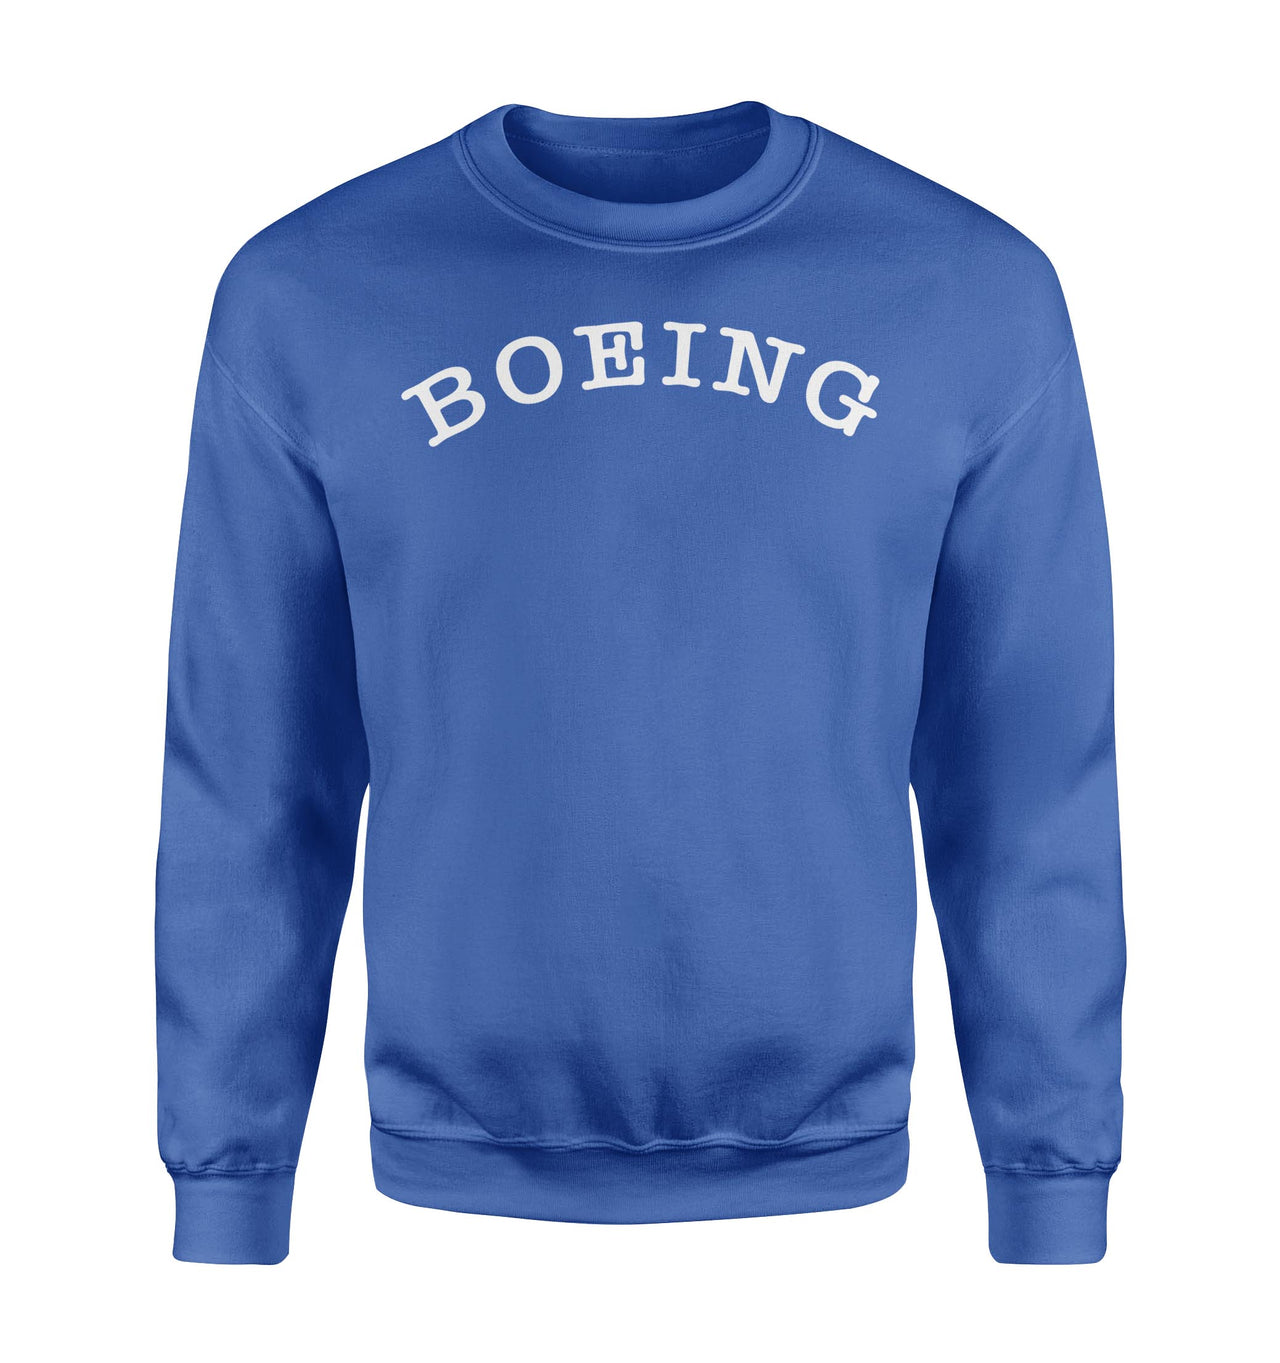 Special Boeing Text Designed Sweatshirts